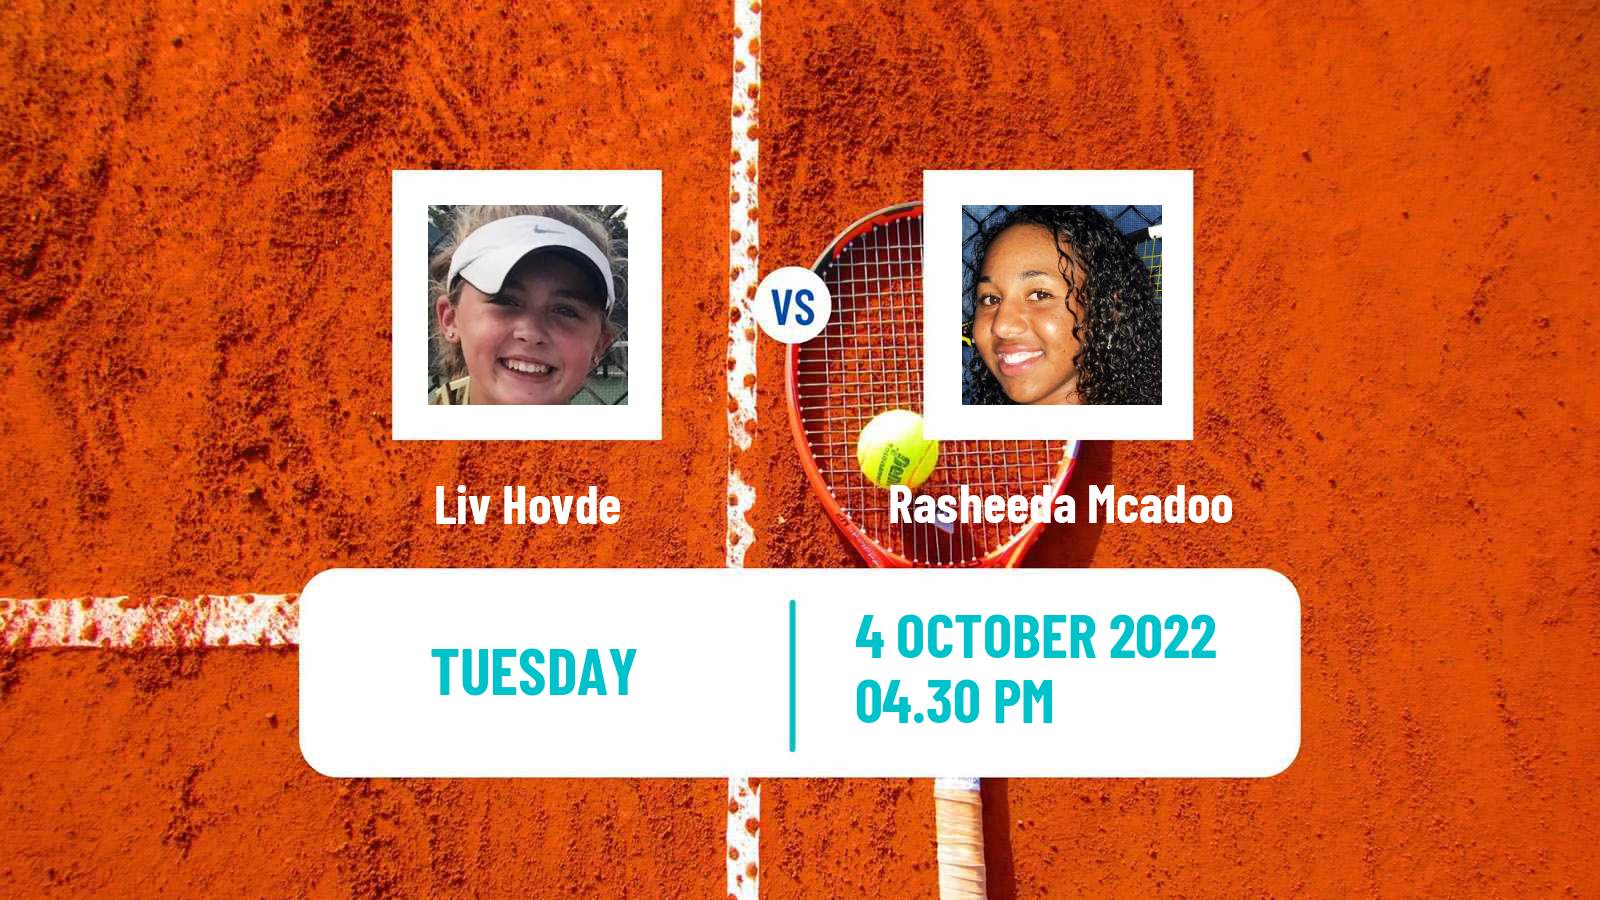 Tennis ITF Tournaments Liv Hovde - Rasheeda Mcadoo